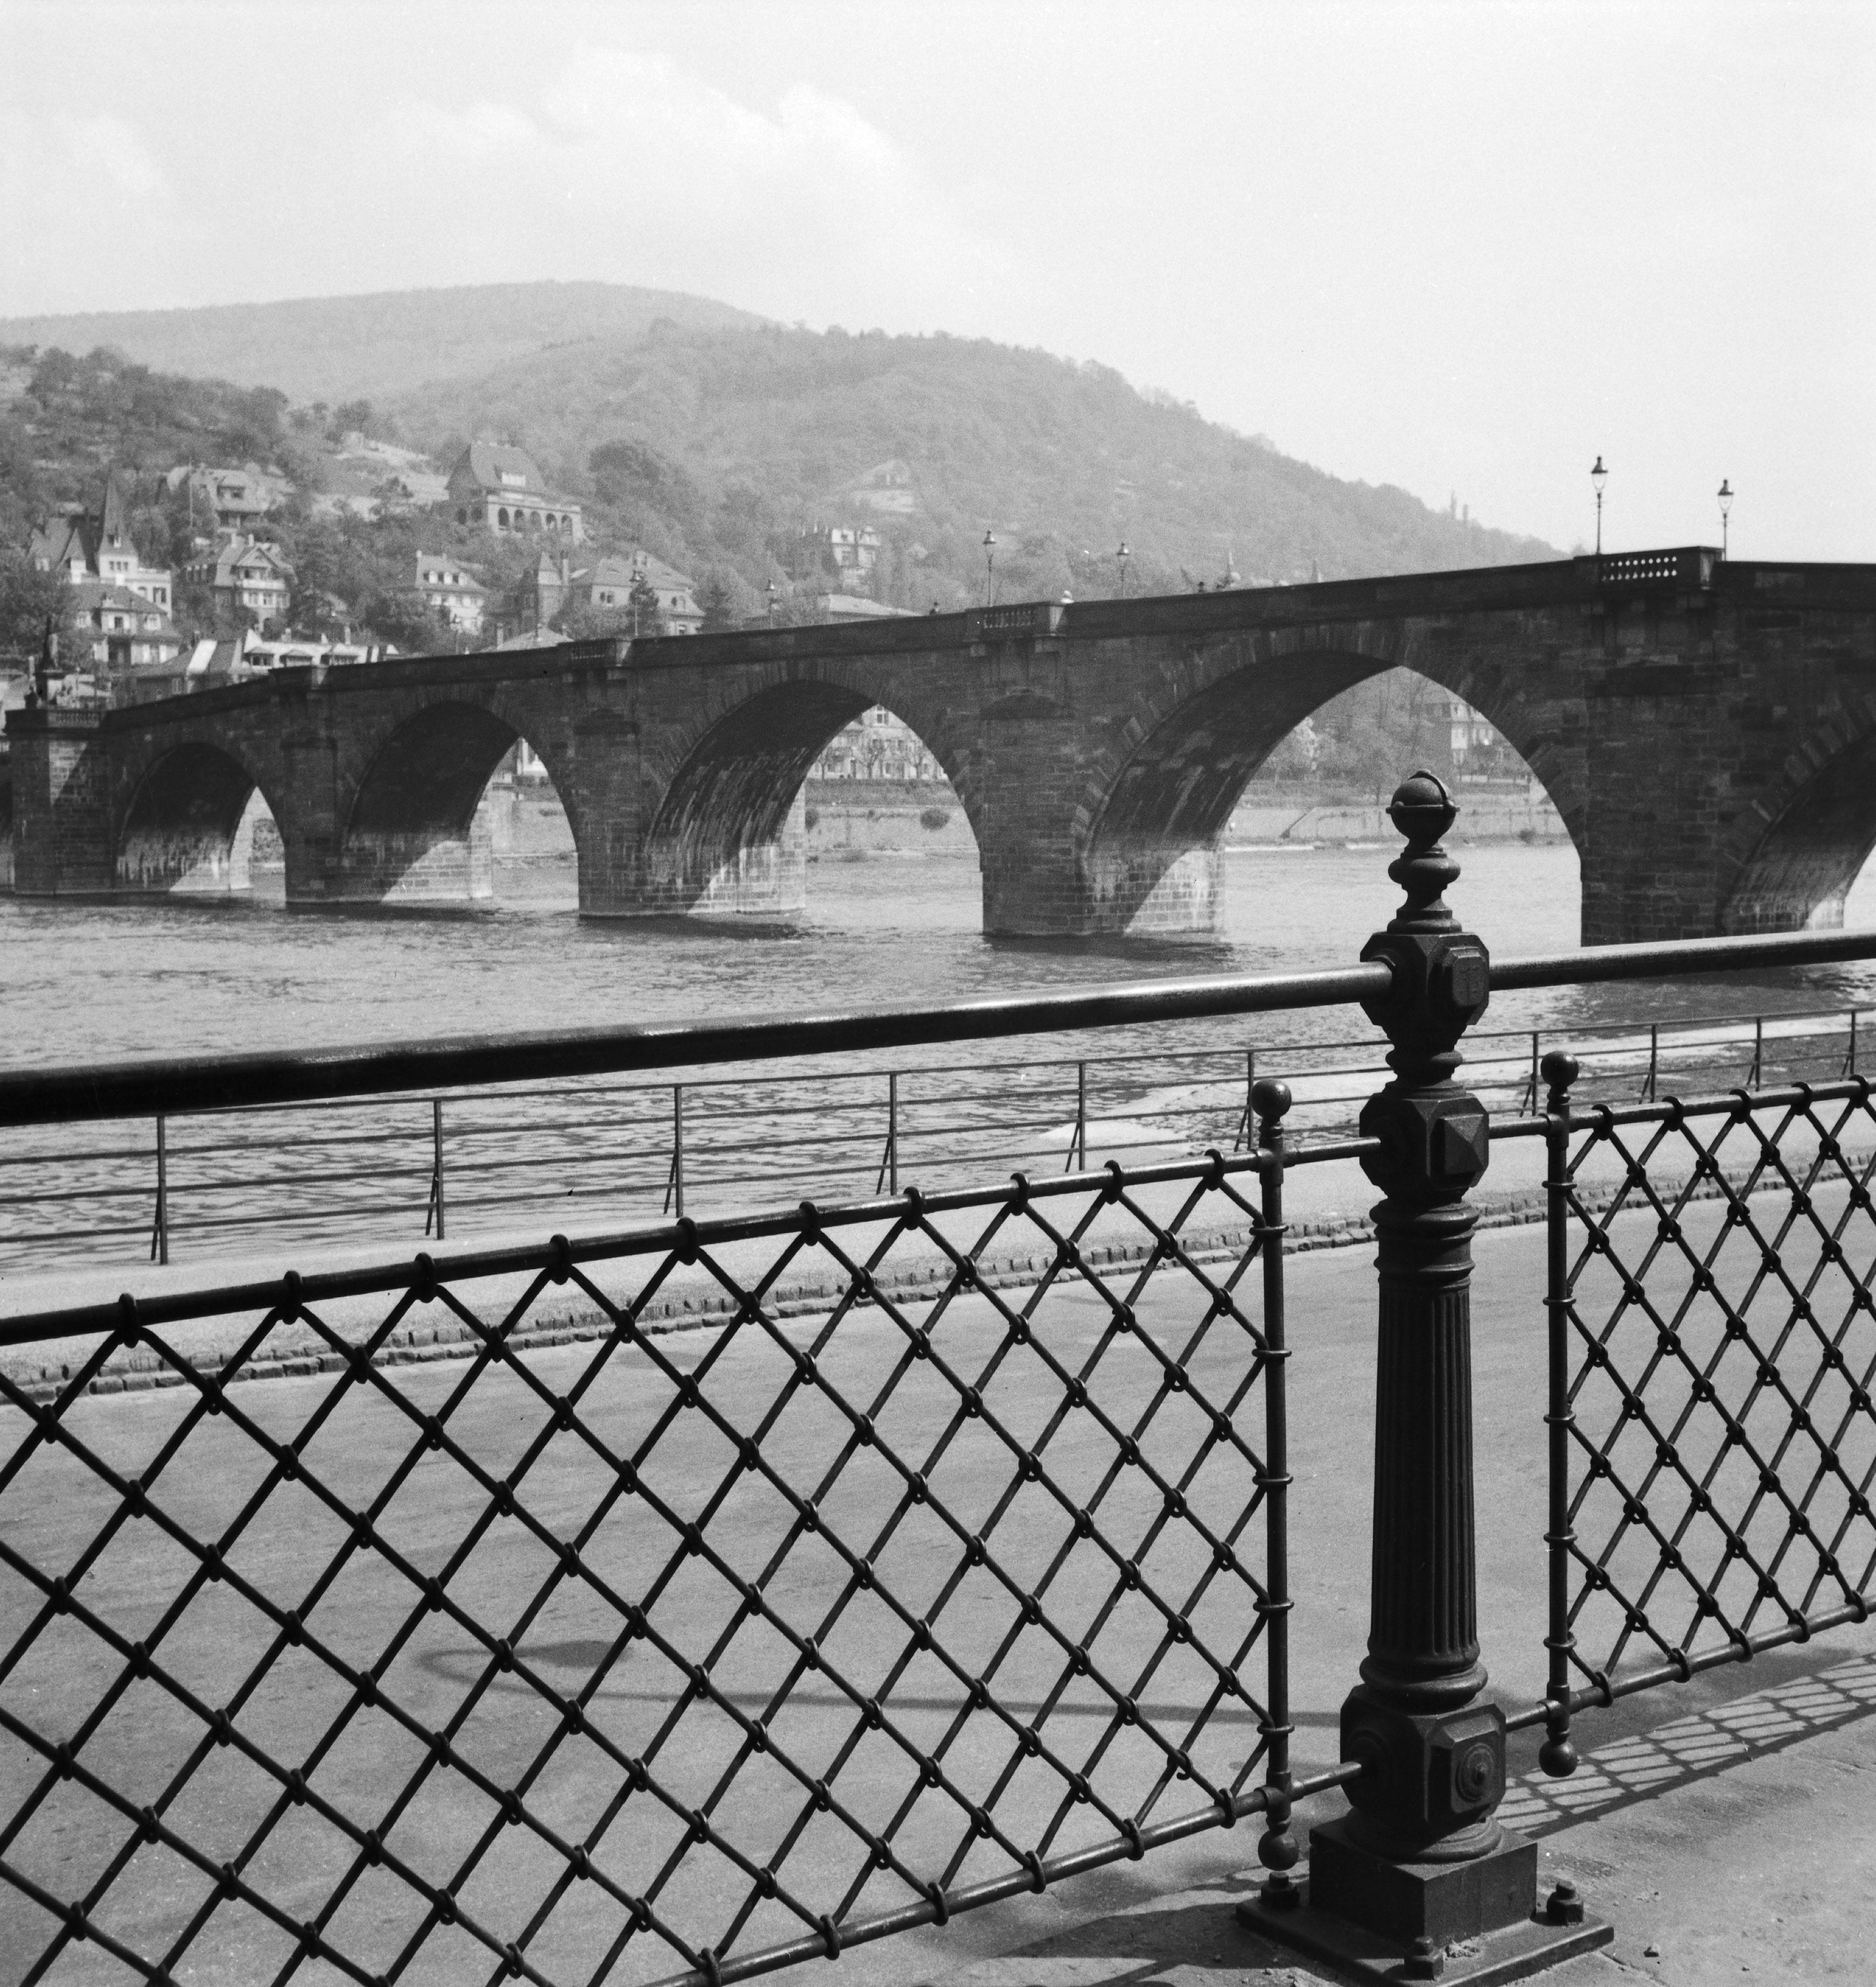 Karl Heinrich Lämmel Black and White Photograph - View to old bridge over river Neckar at Heidelberg, Germany 1936, Printed Later 